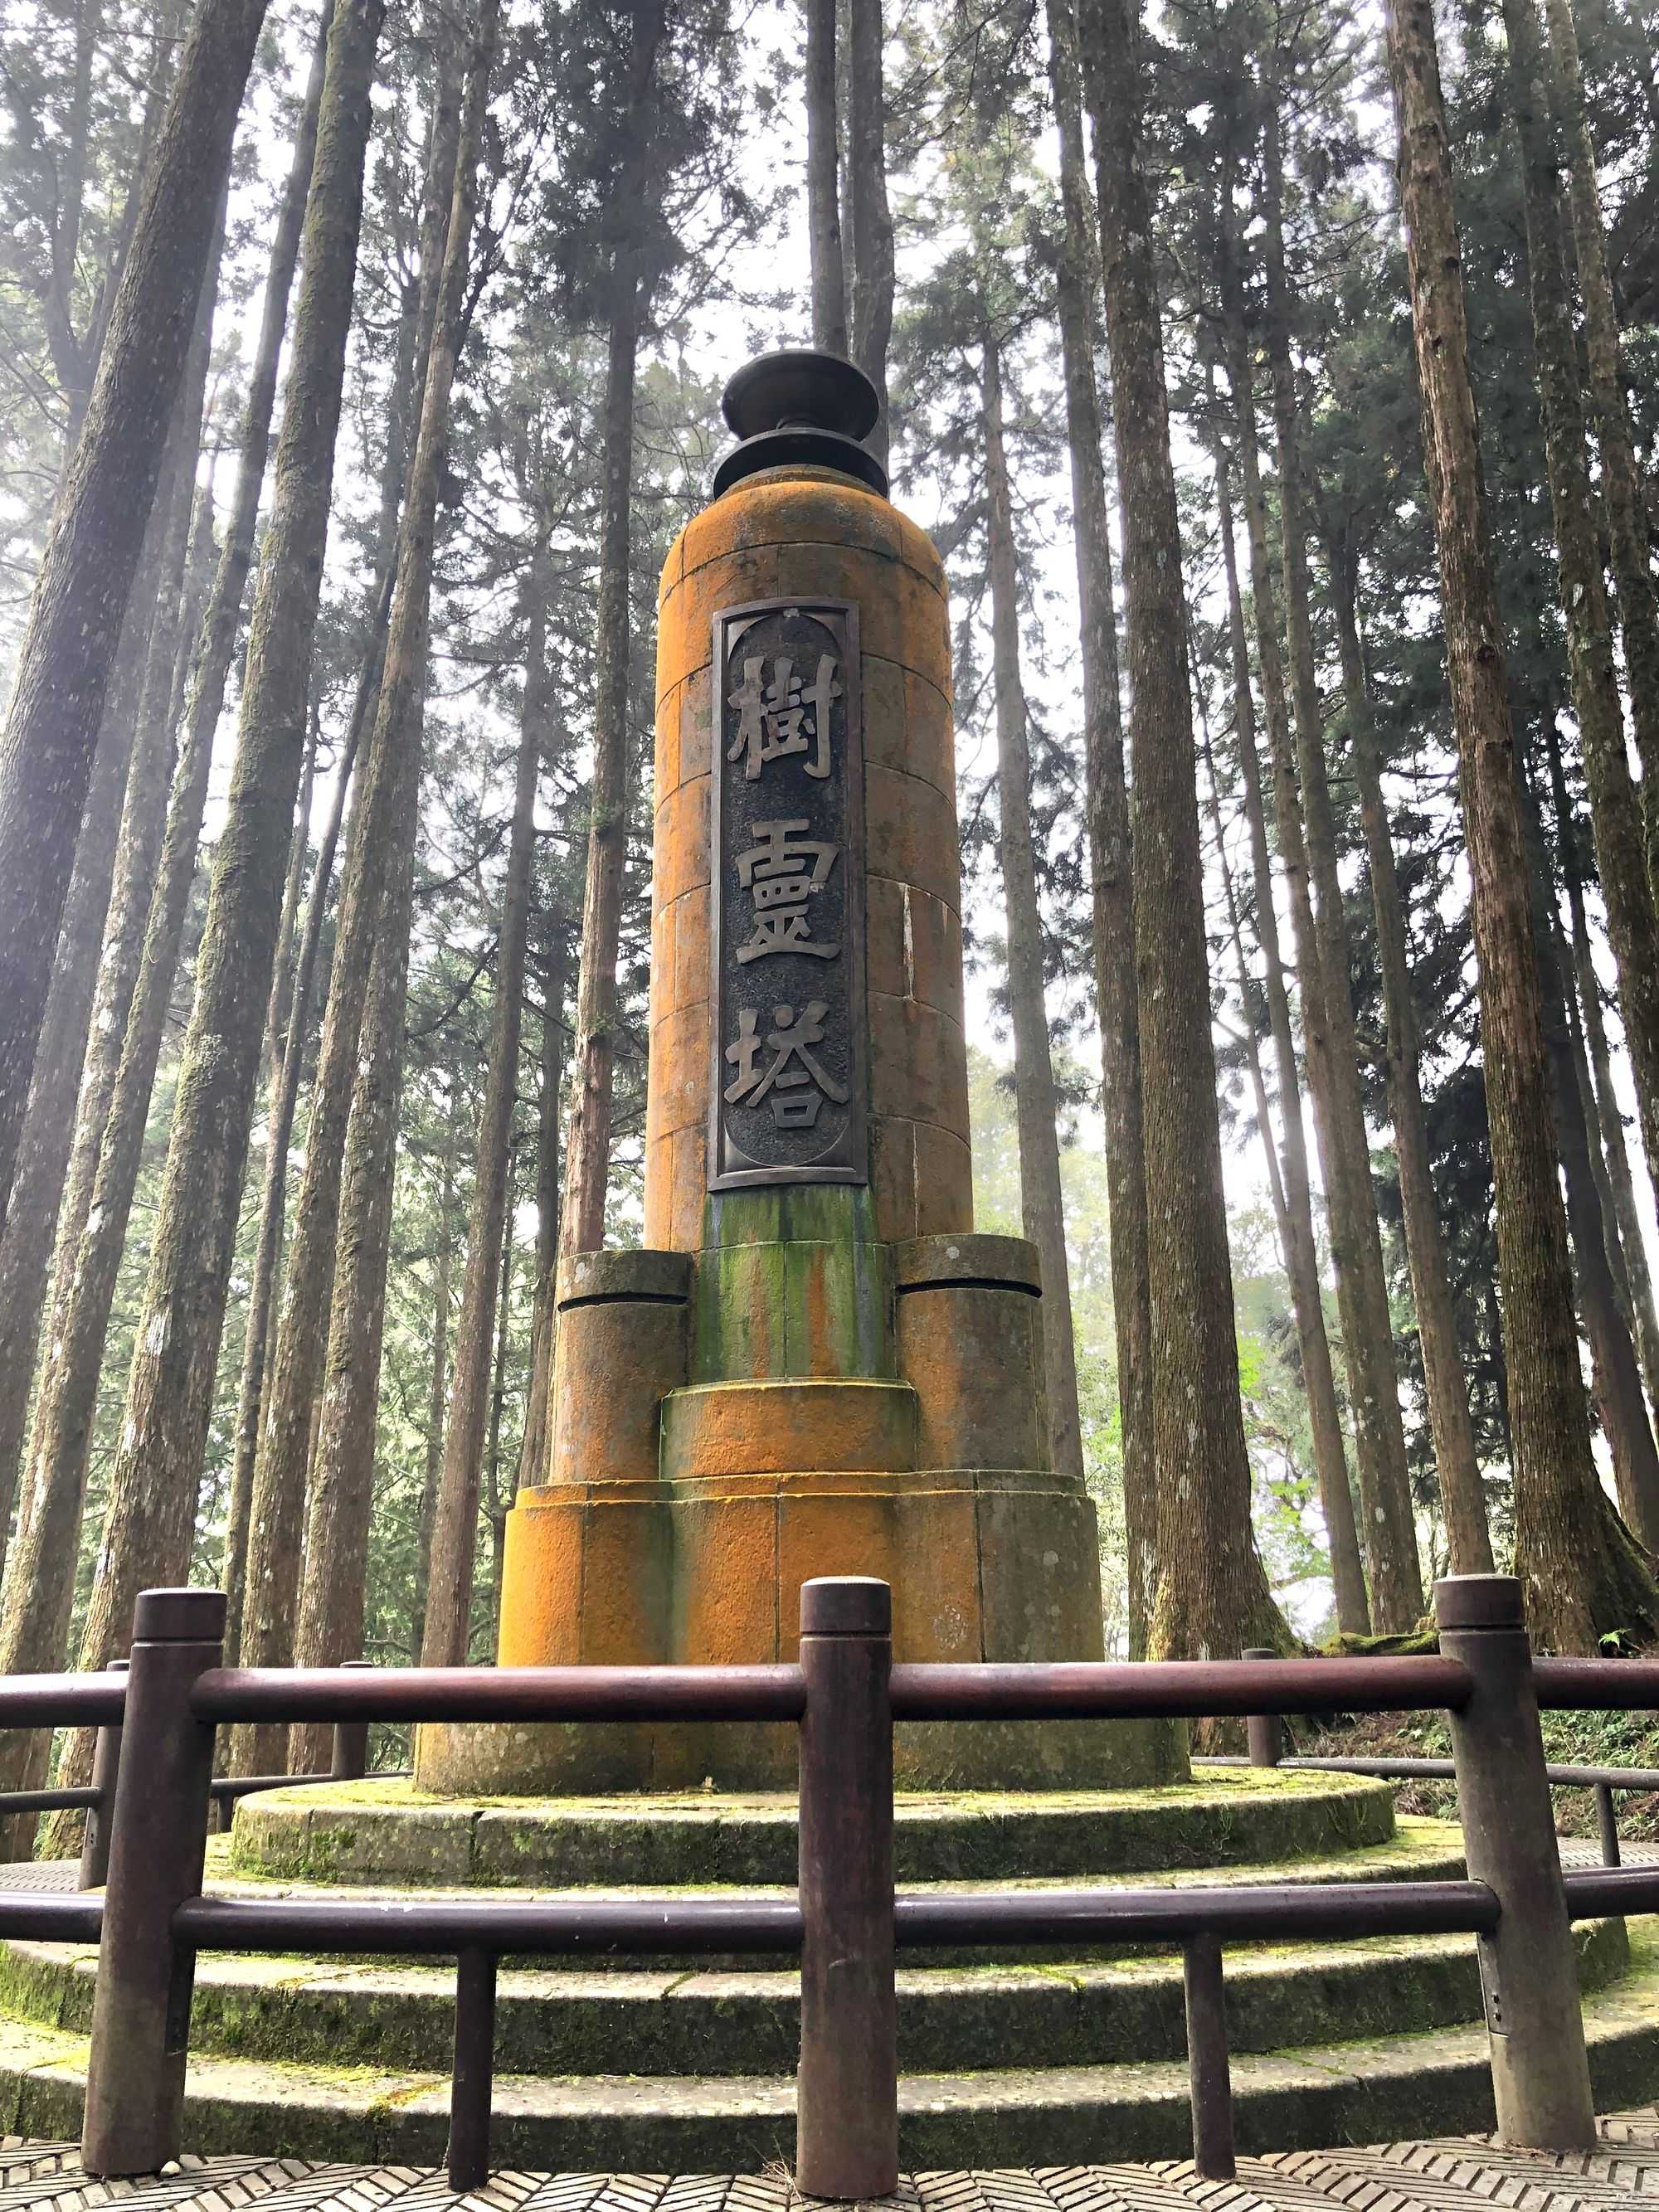 Tree Spirit Pagoda (Image by author)